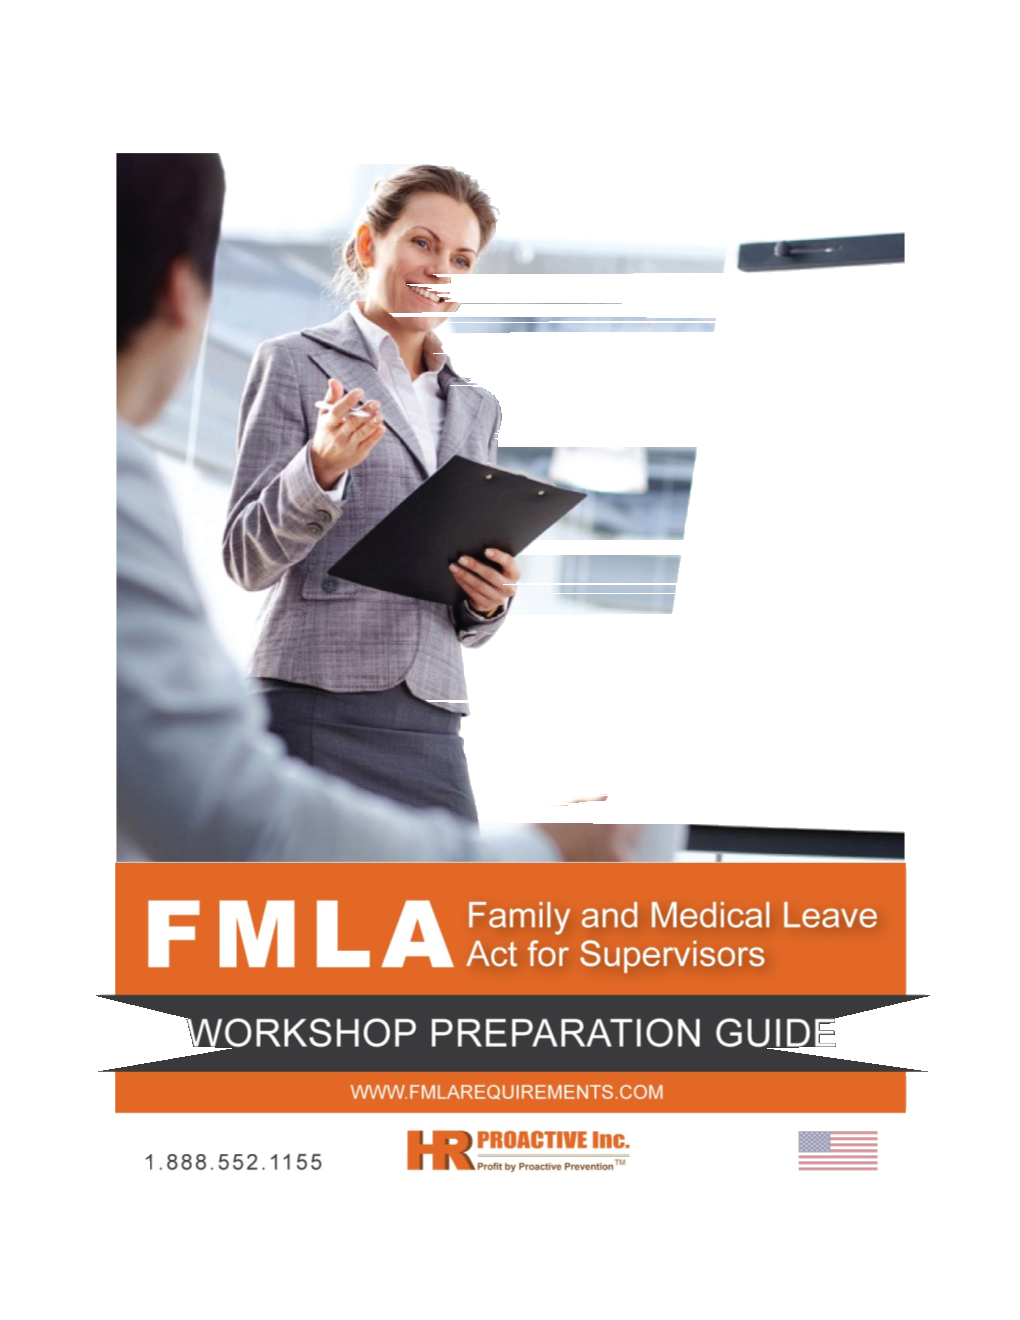 FMLA Workshop Preparation Guide